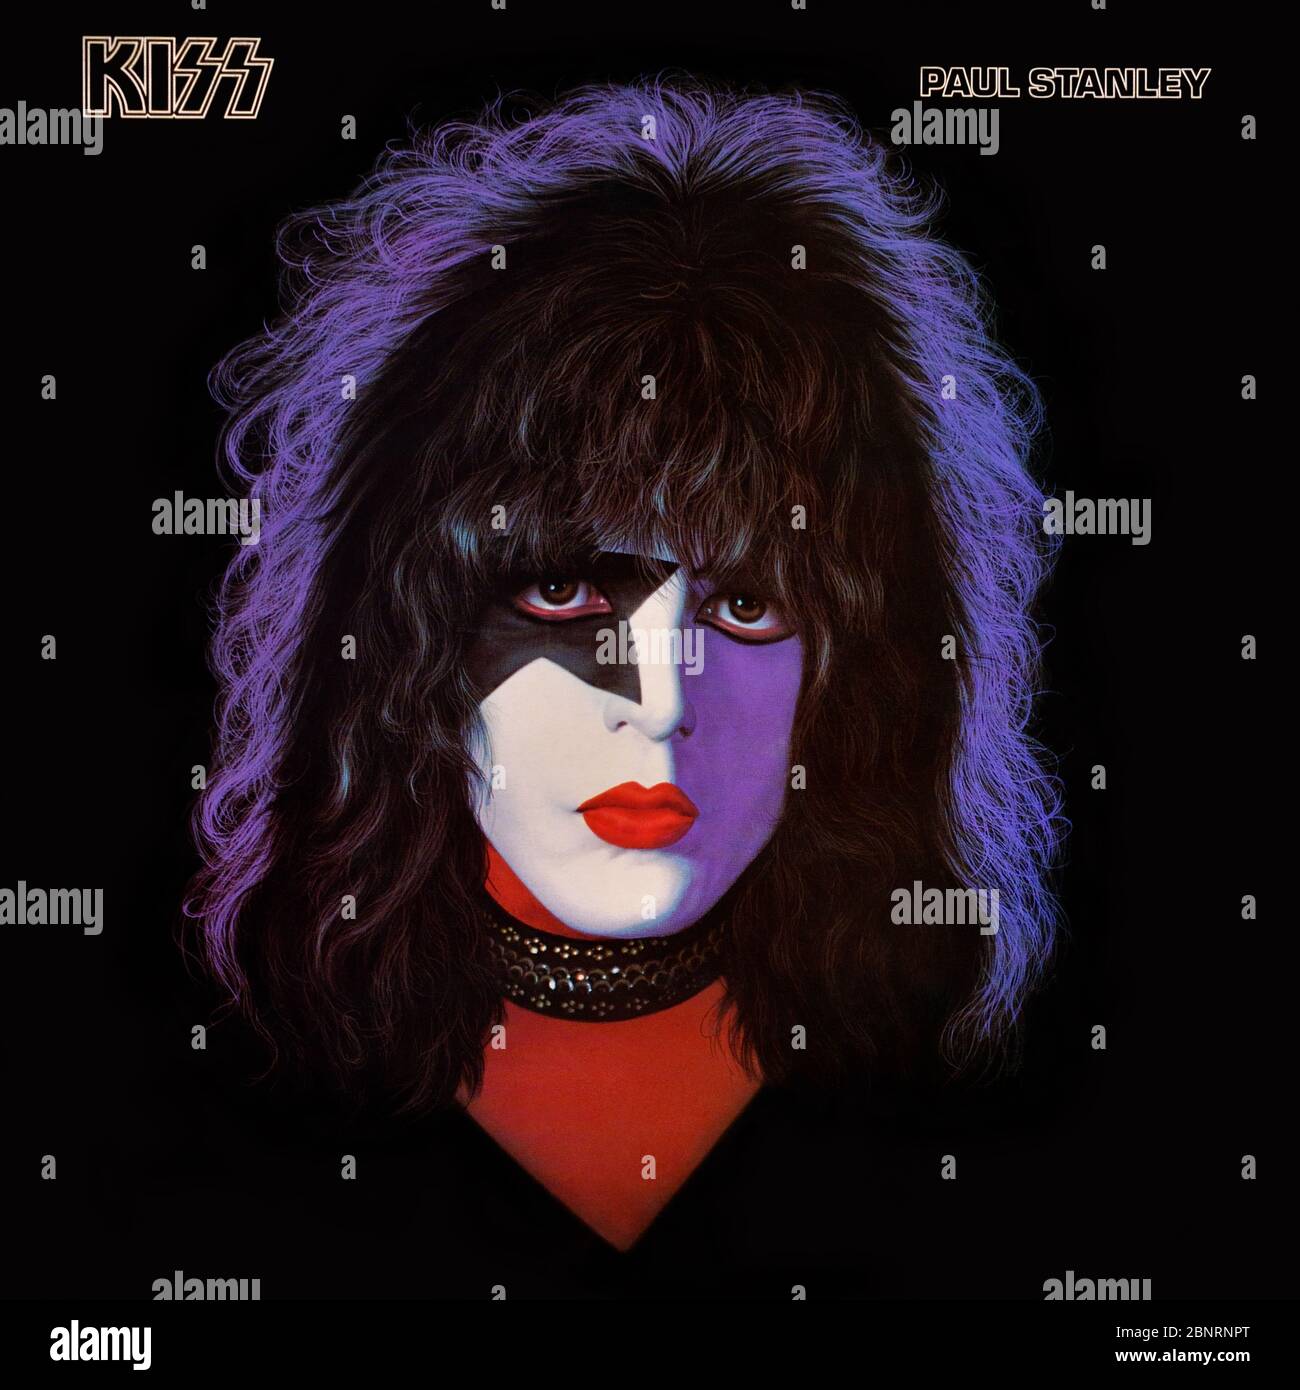 Kiss - original Vinyl Album Cover - Paul Stanley - 1978 Stockfoto